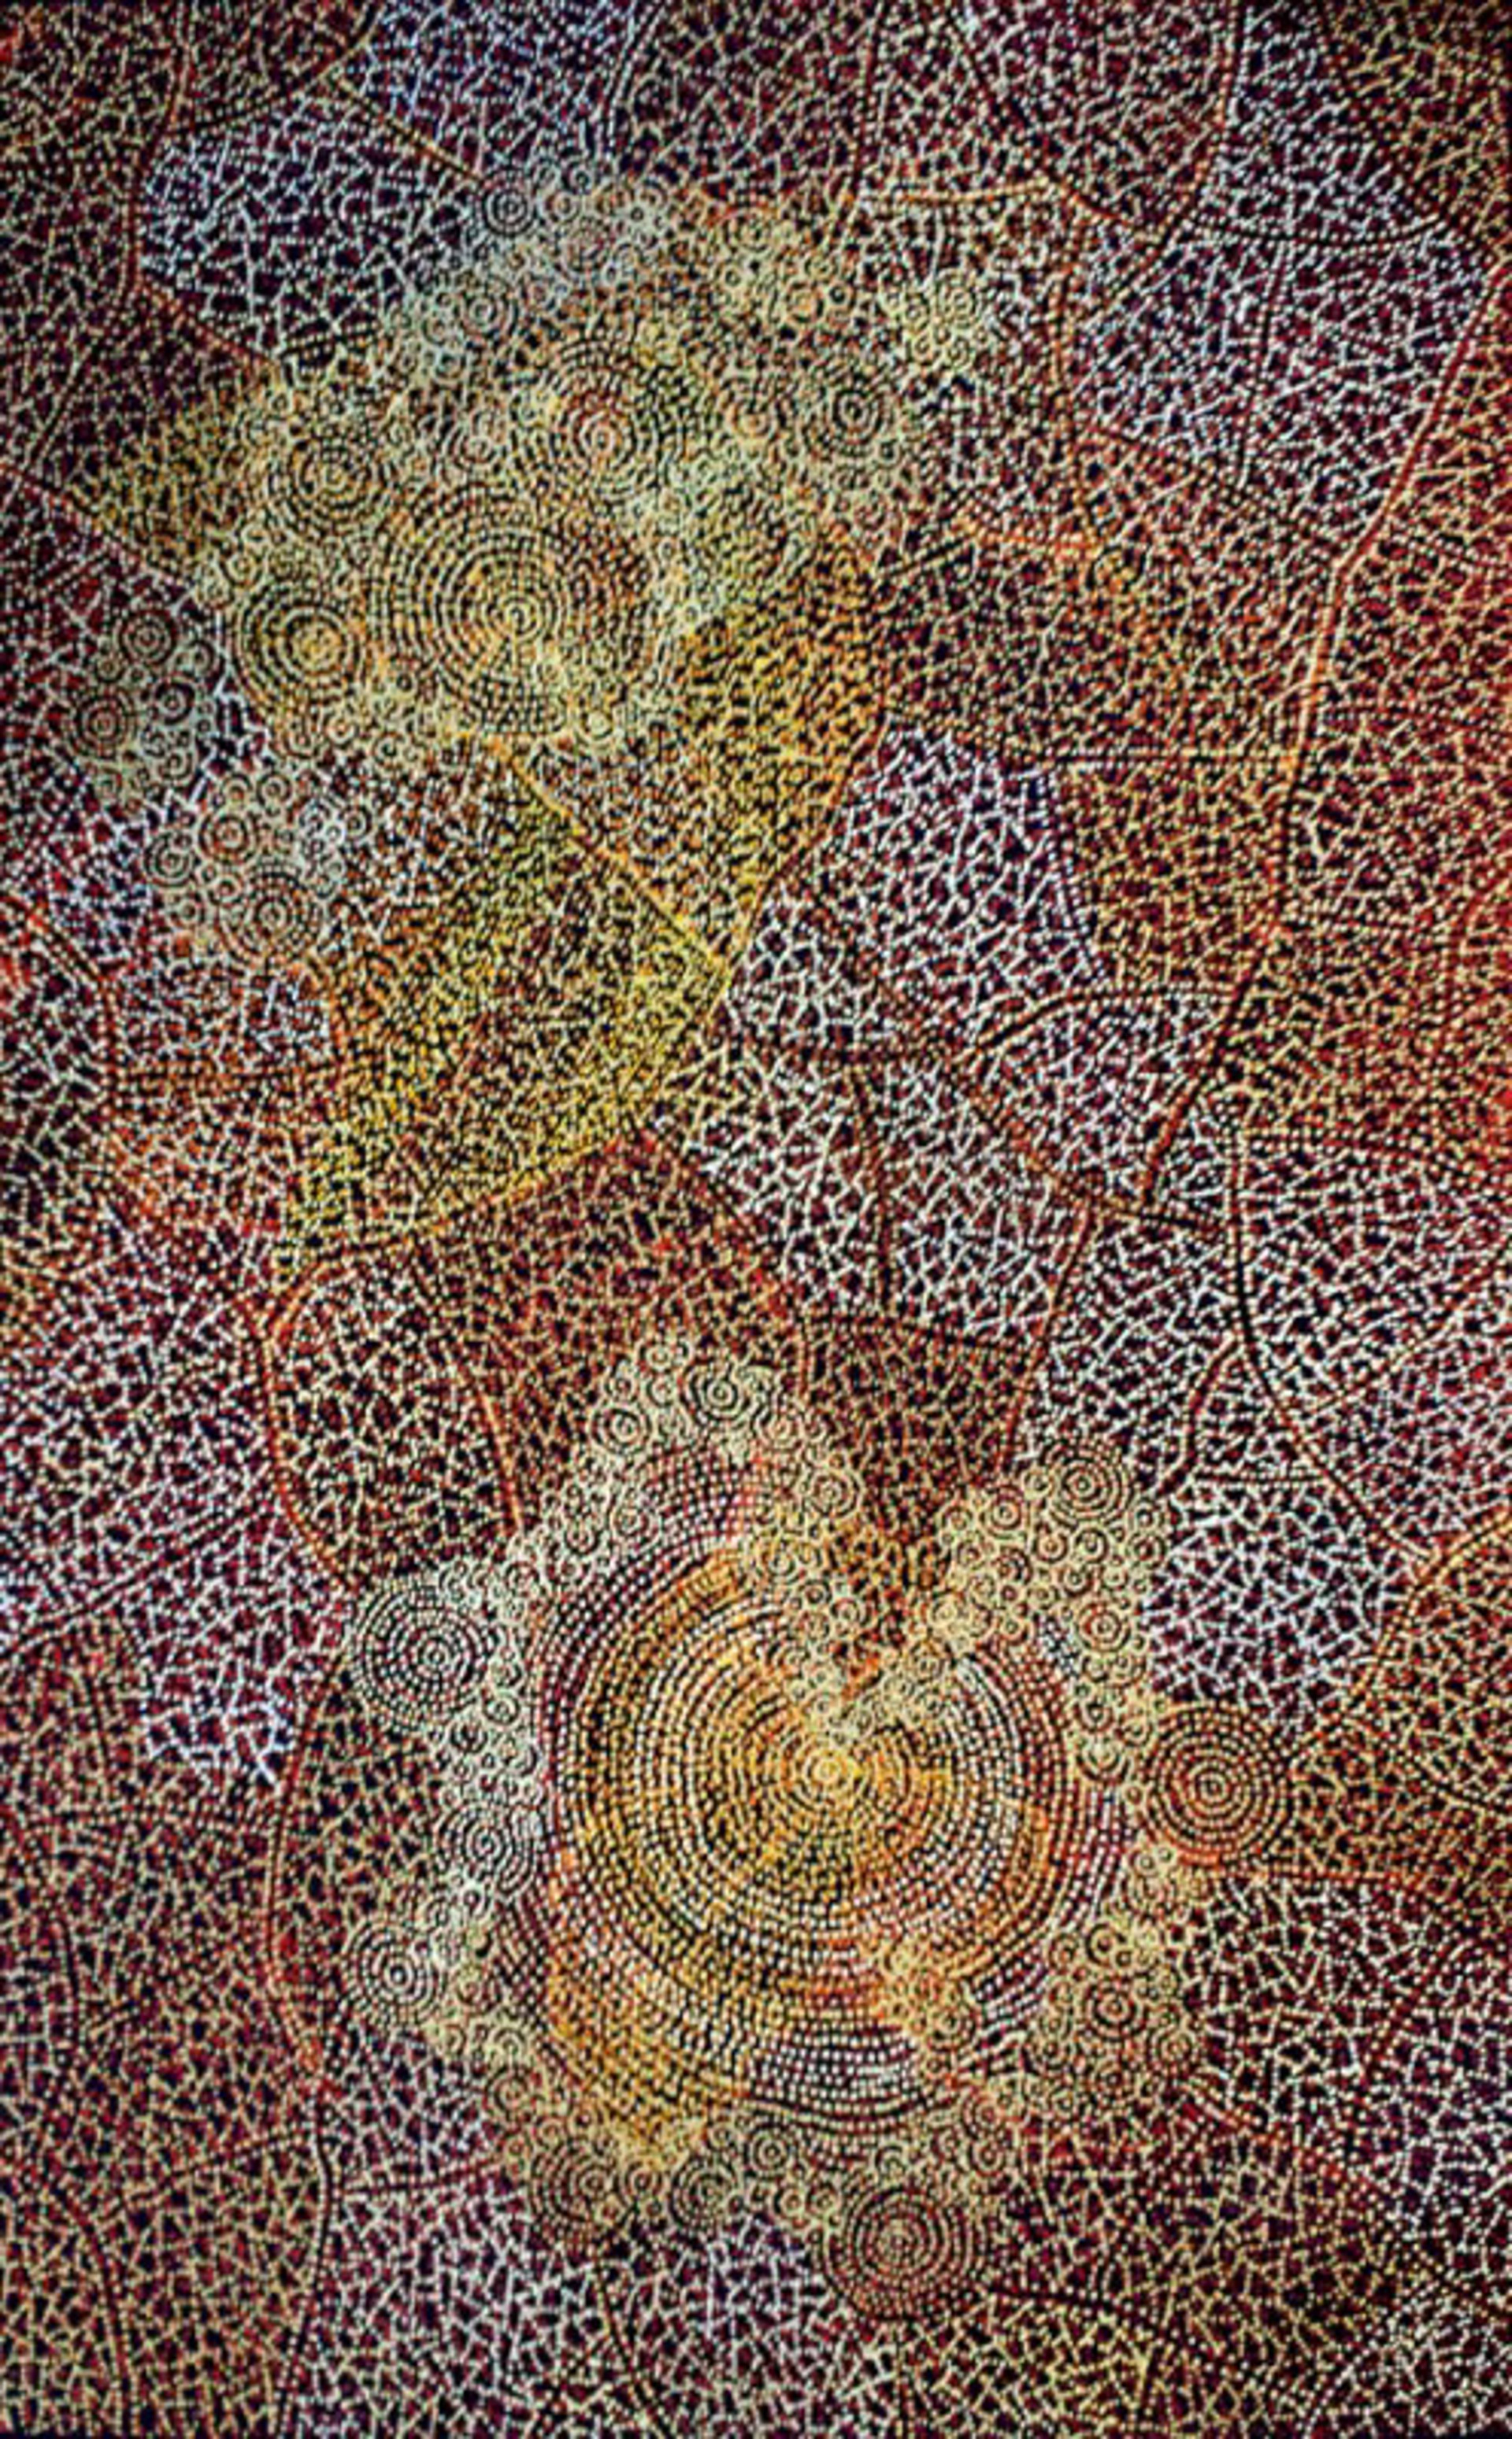 Ancestors II by Australian Aboriginal Artists